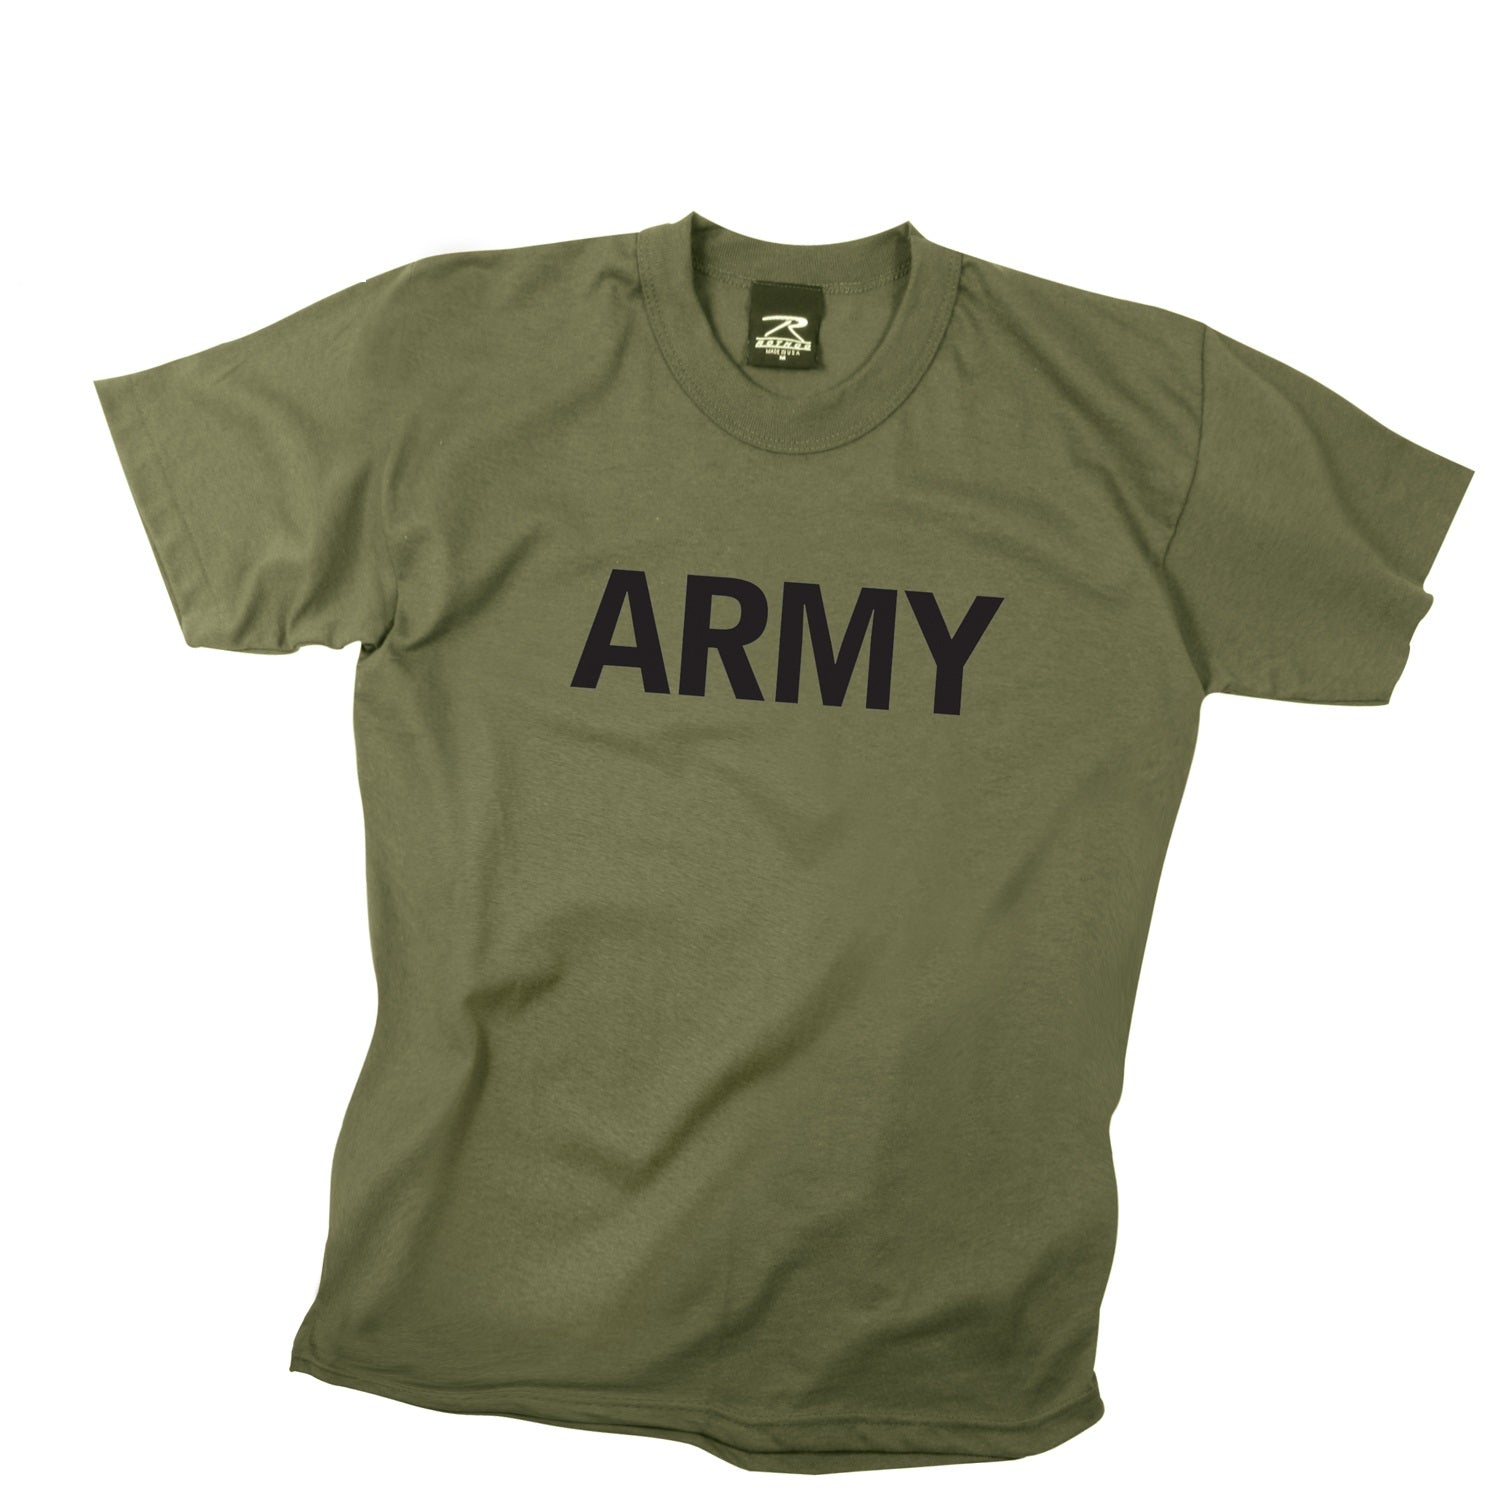 Rothco Kids Army Physical Training T-Shirt Olive Drab